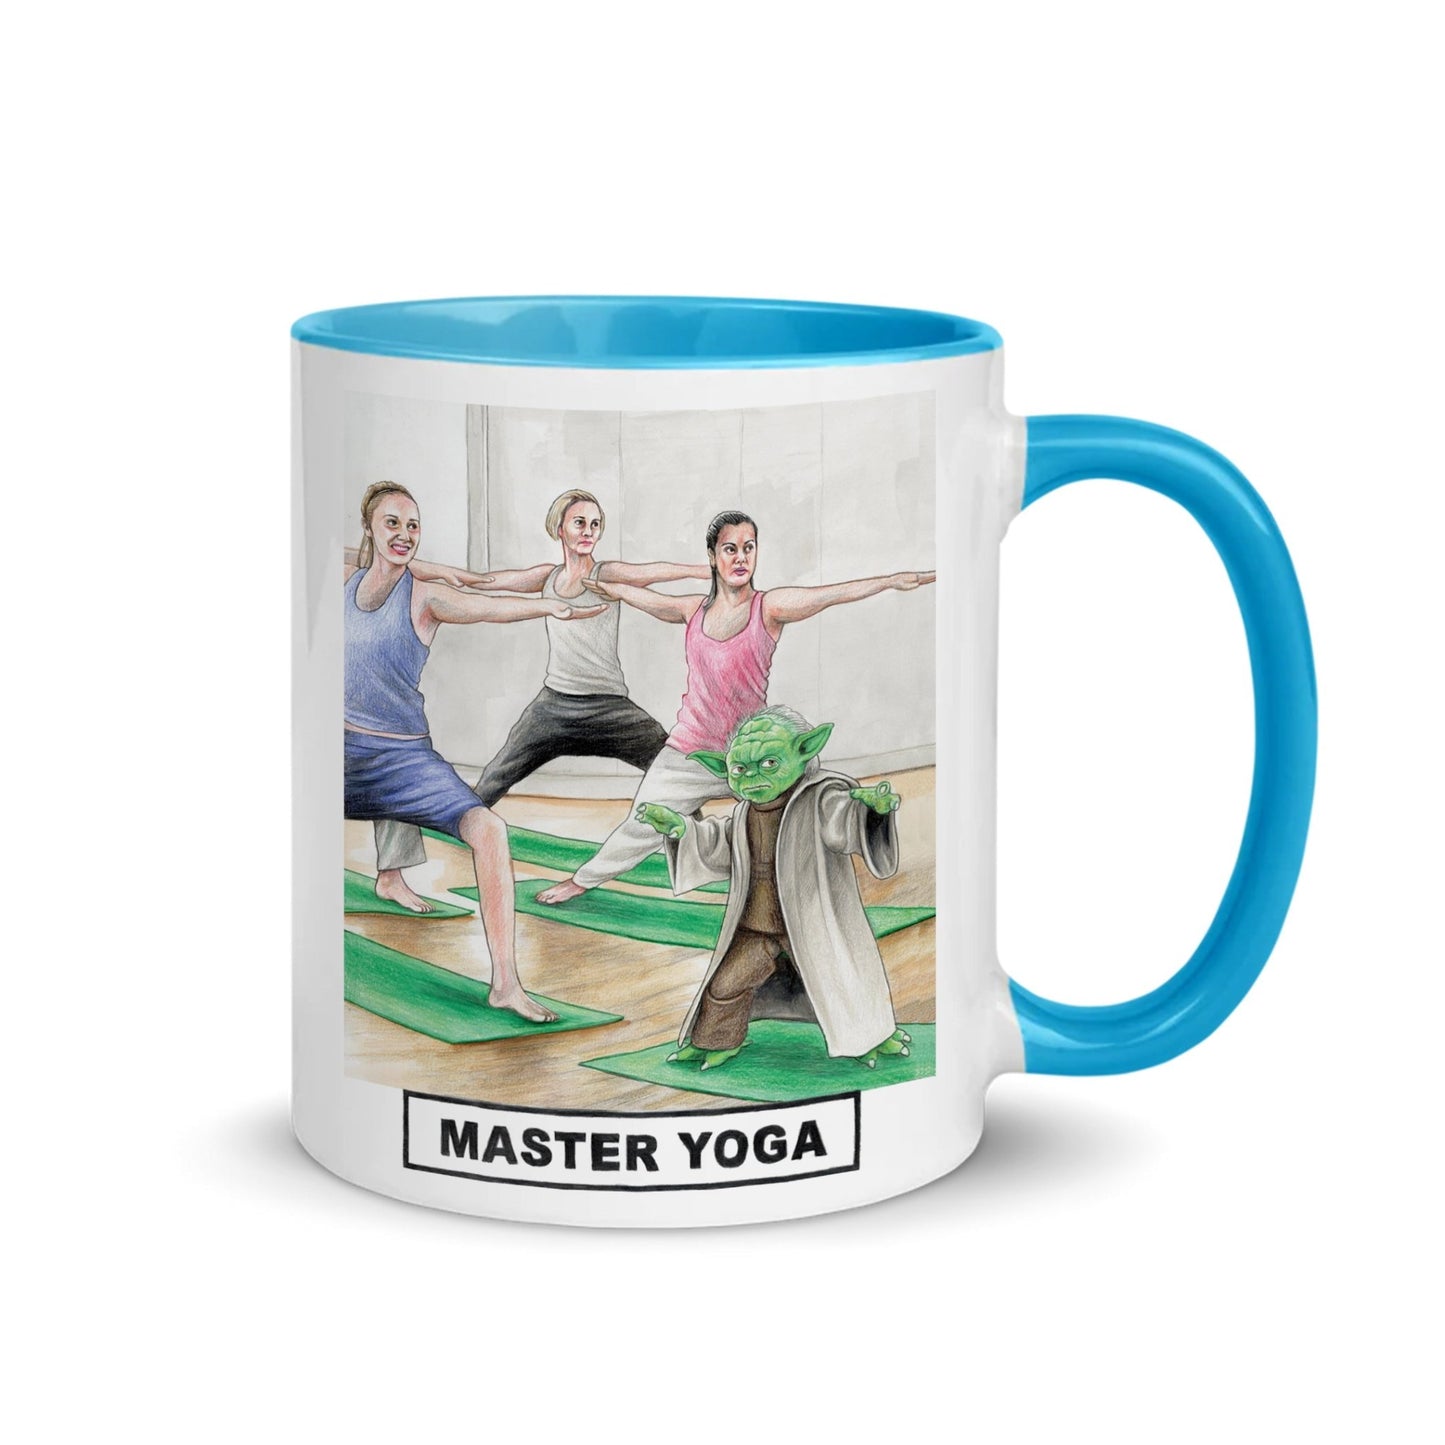 Master Yoga Ceramic Mug - Quite Good Cards Funny Birthday Card